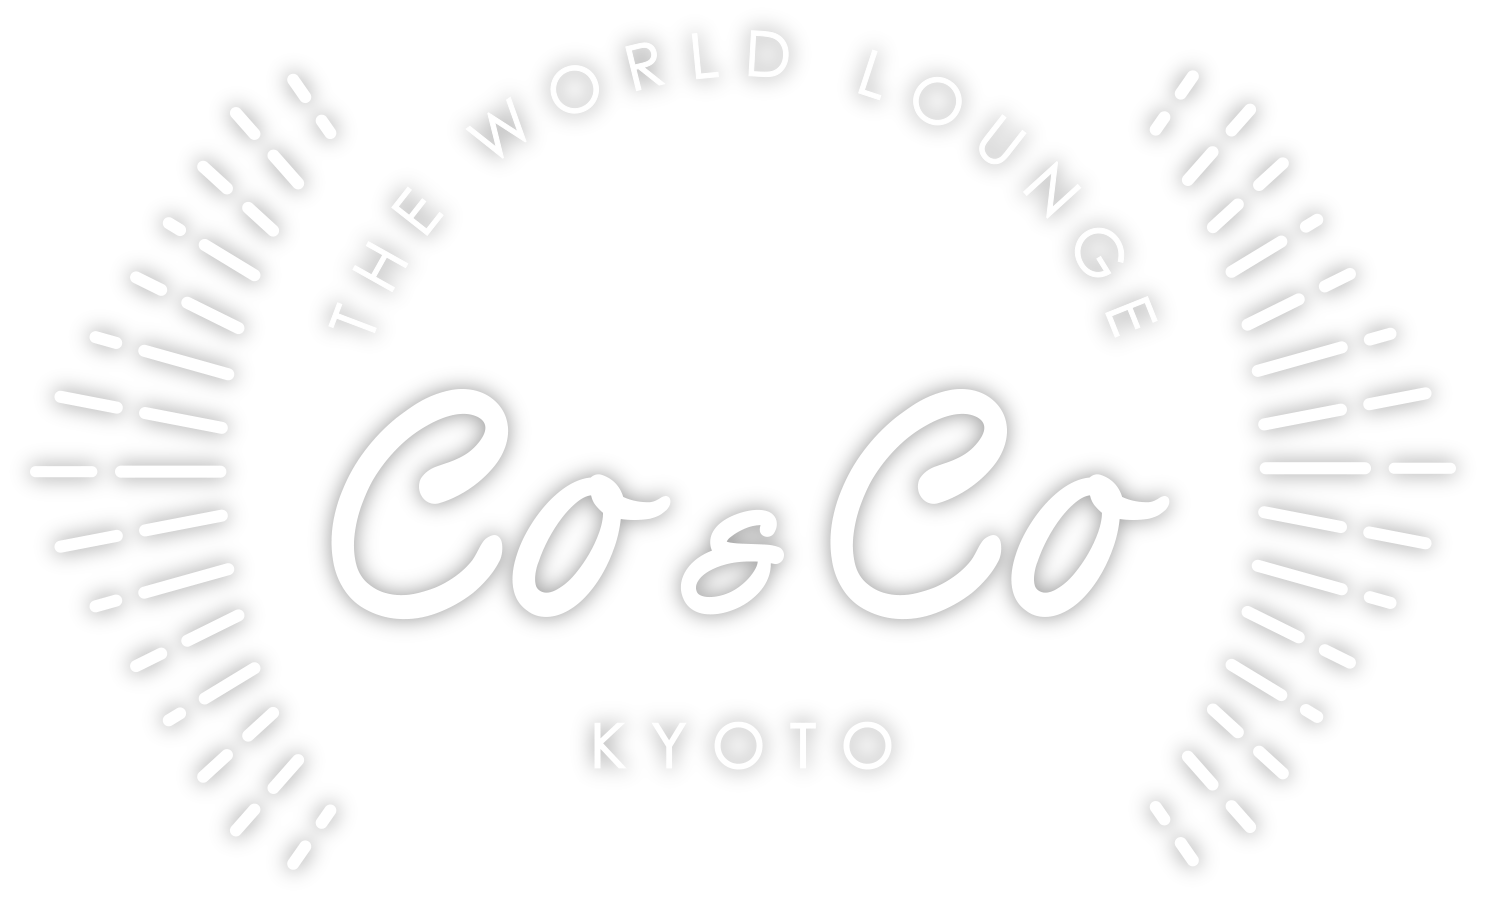 The World Lounge Co&Co Kyoto | ザ・ワールドラウンジ Co&Co 京都